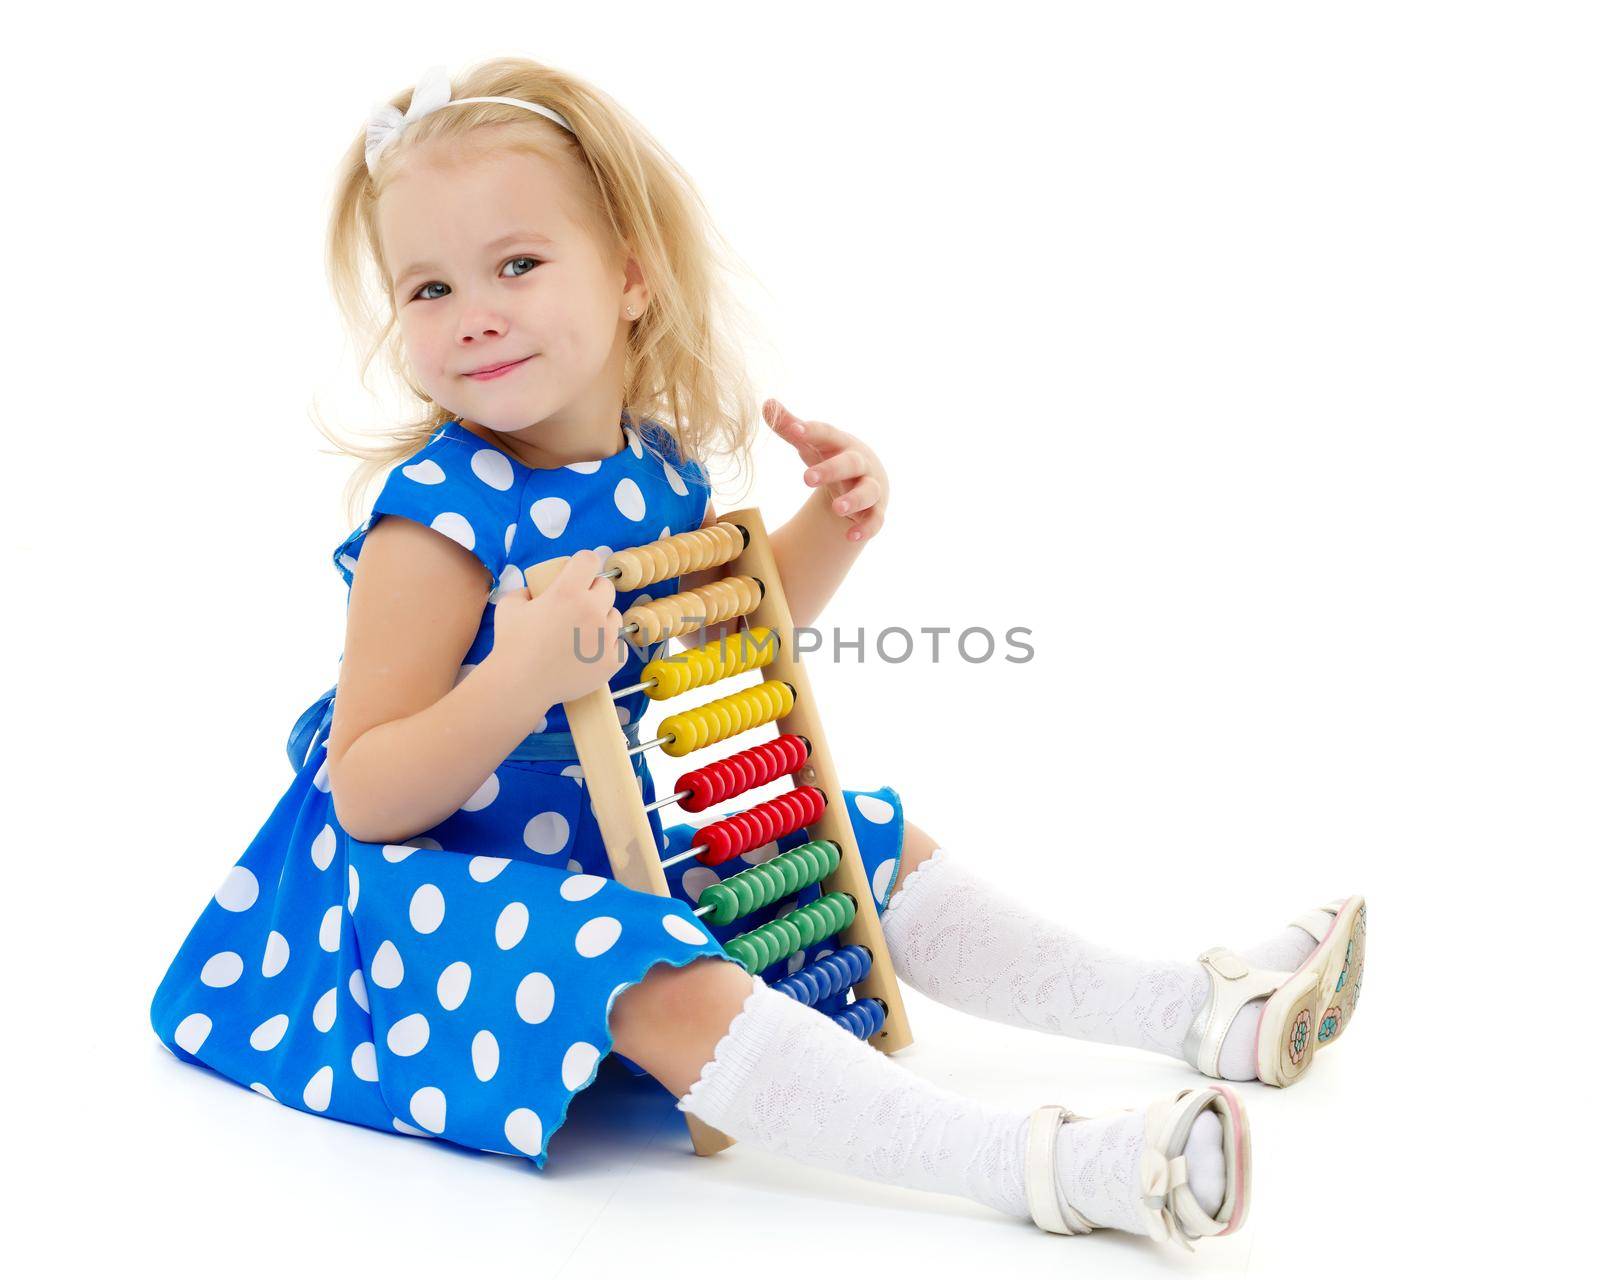 The girl counts on abacus by kolesnikov_studio